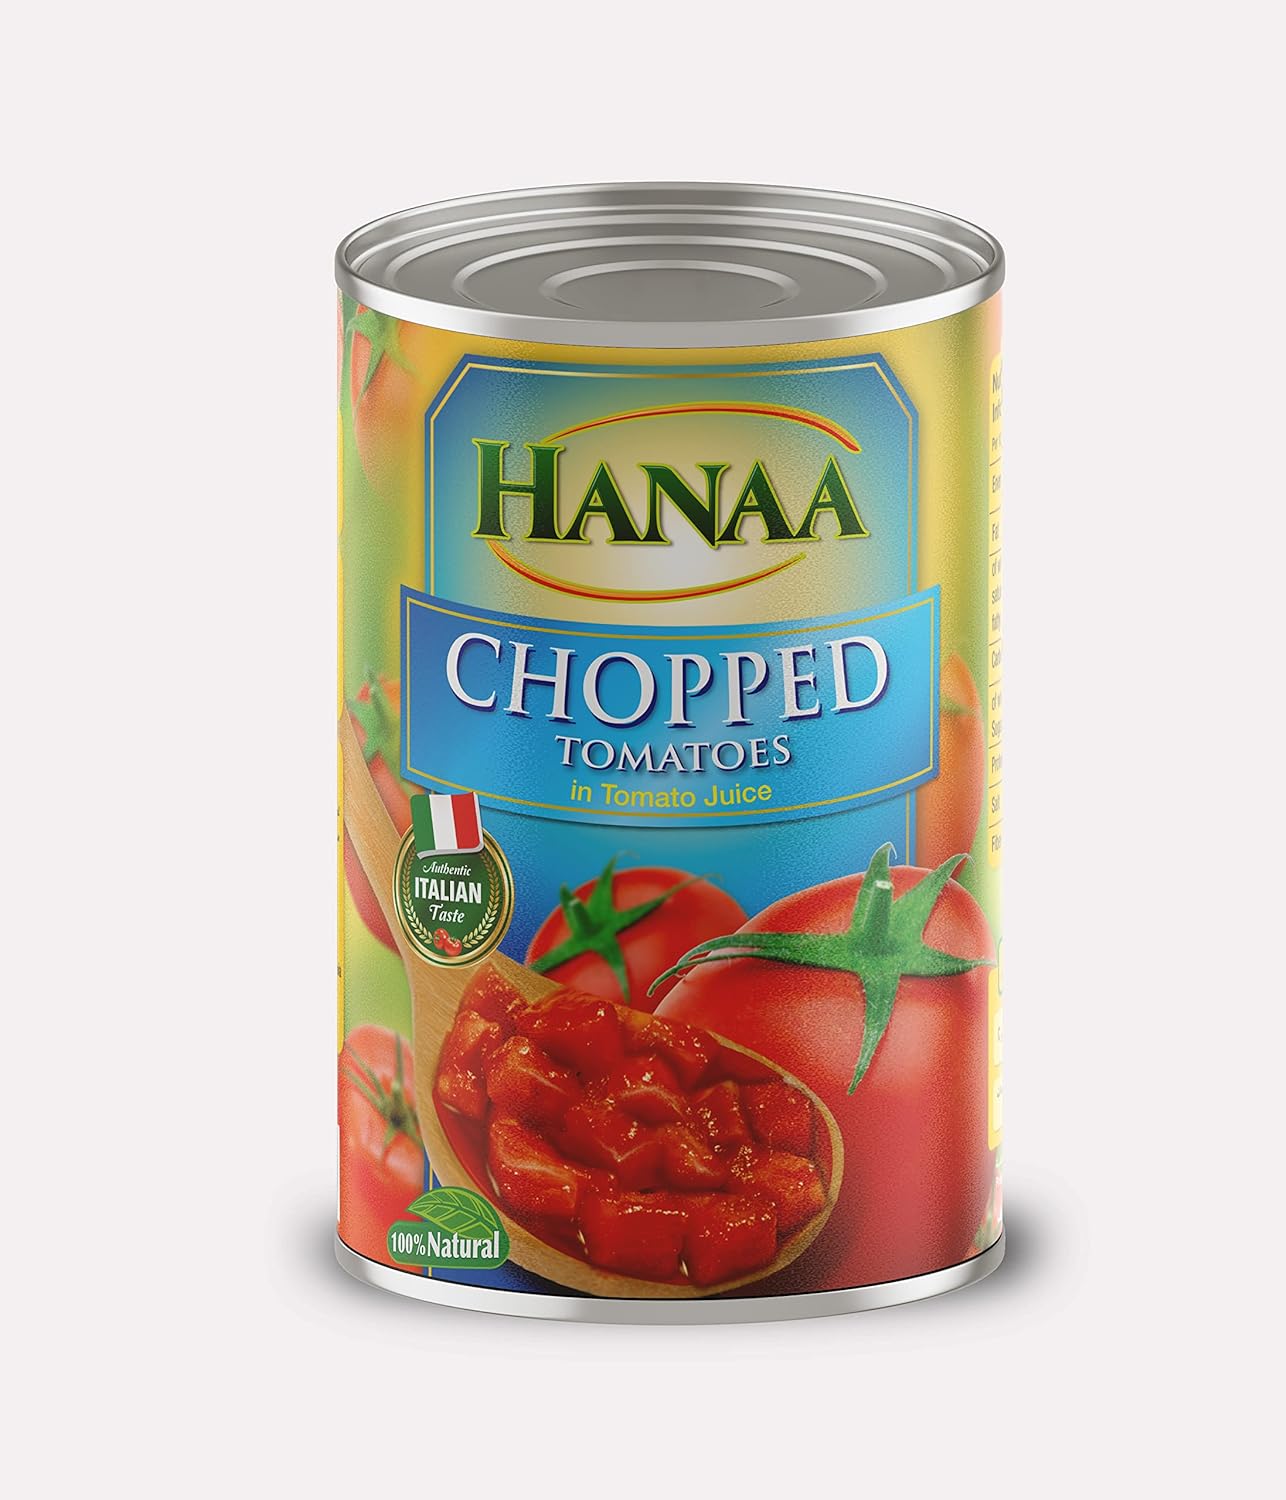 Hanaa Chopped Tomatoes Tin, 400G